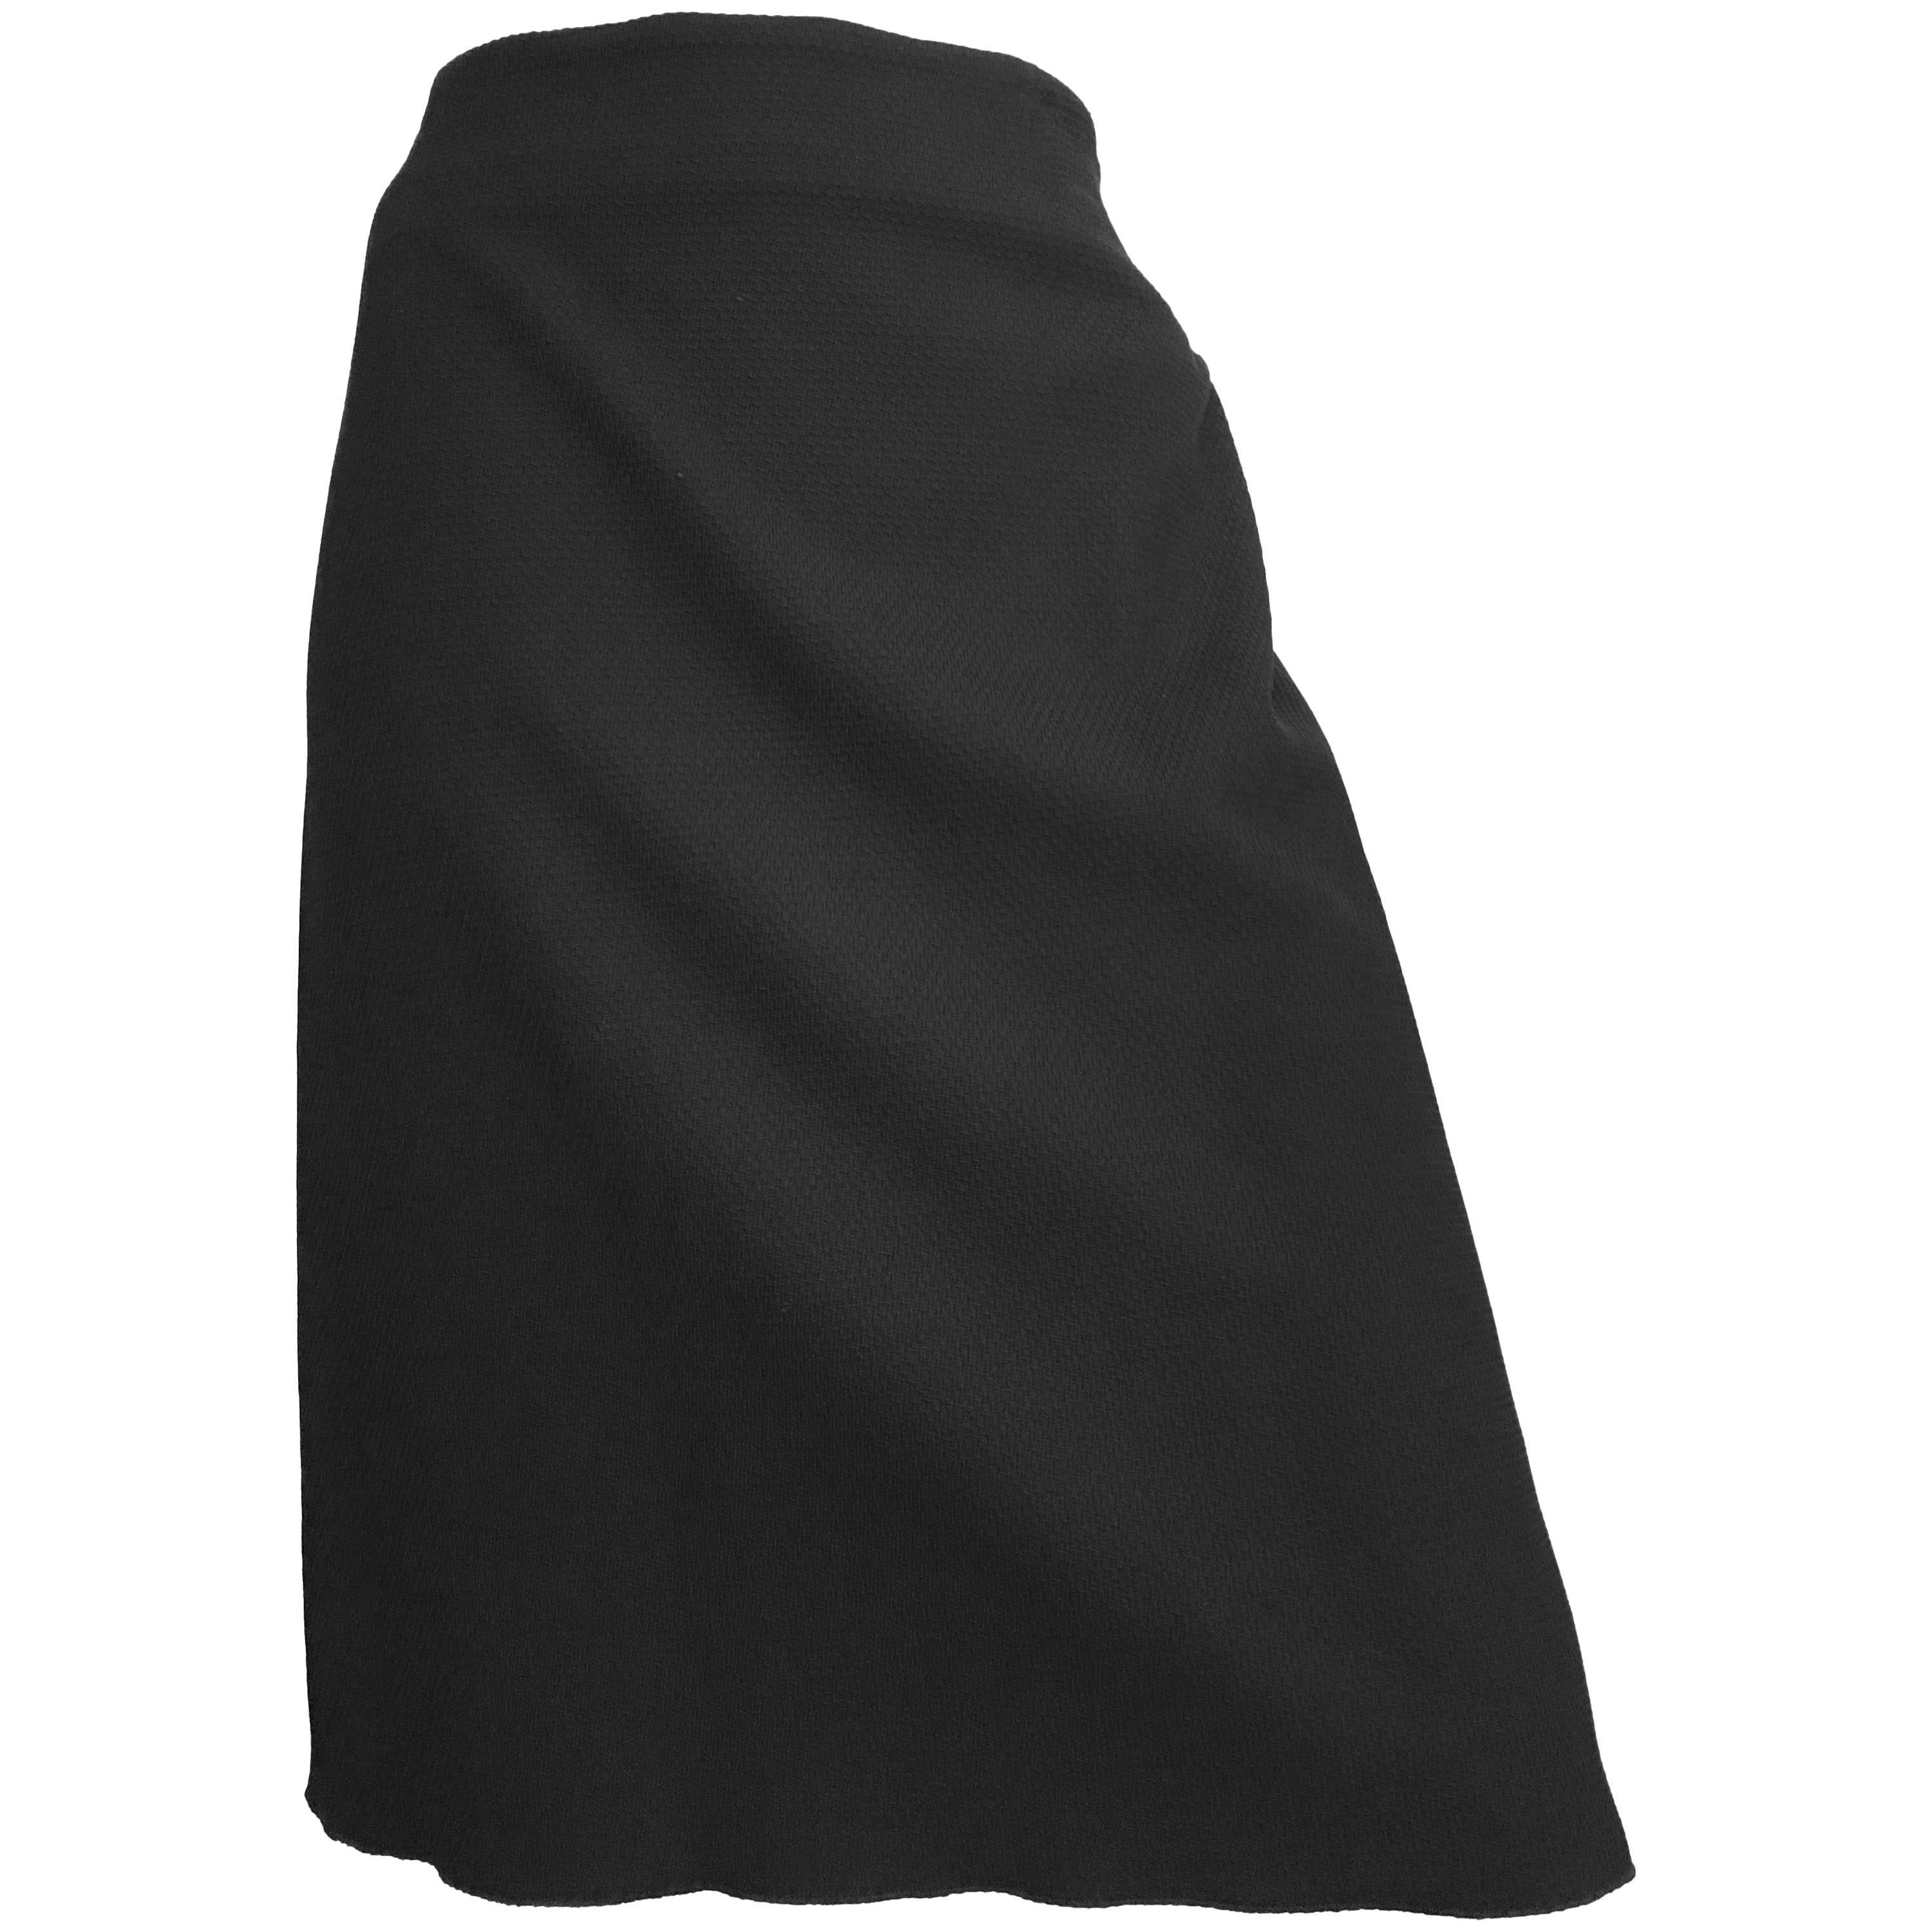 Genny Black Cotton Pencil Skirt 8 / 44. For Sale